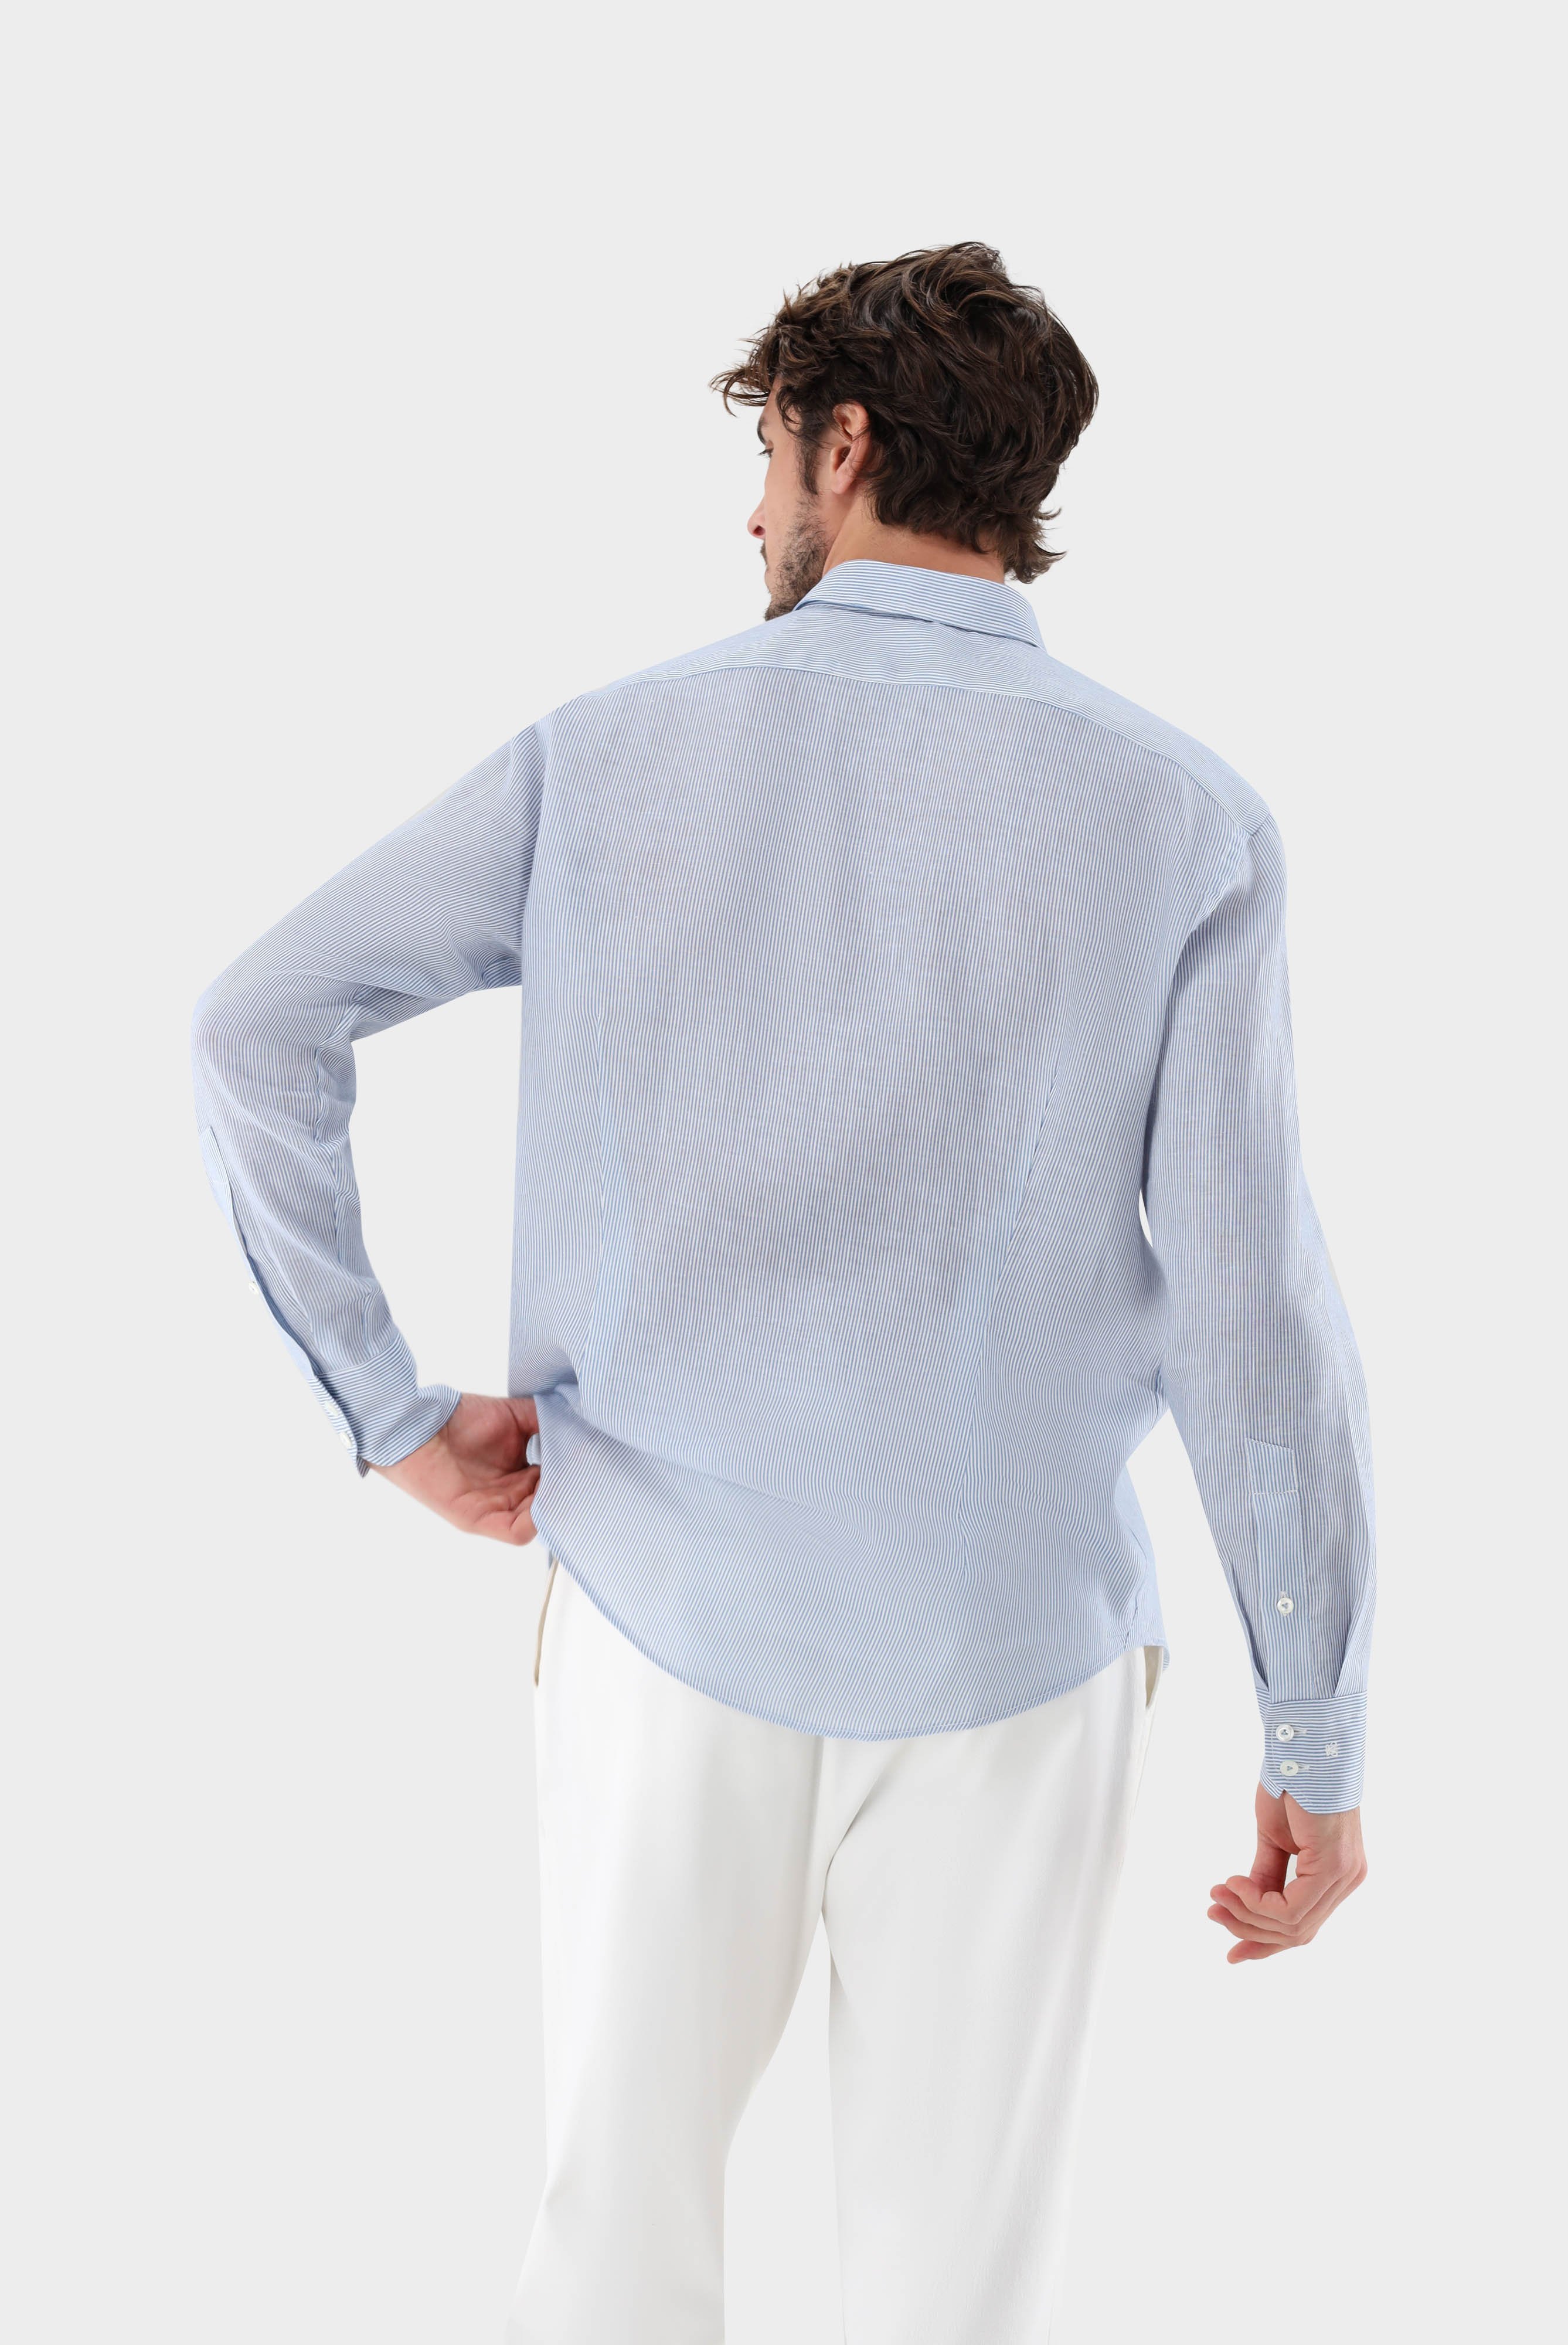 Casual Hemden+Leinenhemd mit Streifendruck+20.2011.9V.170353.740.38